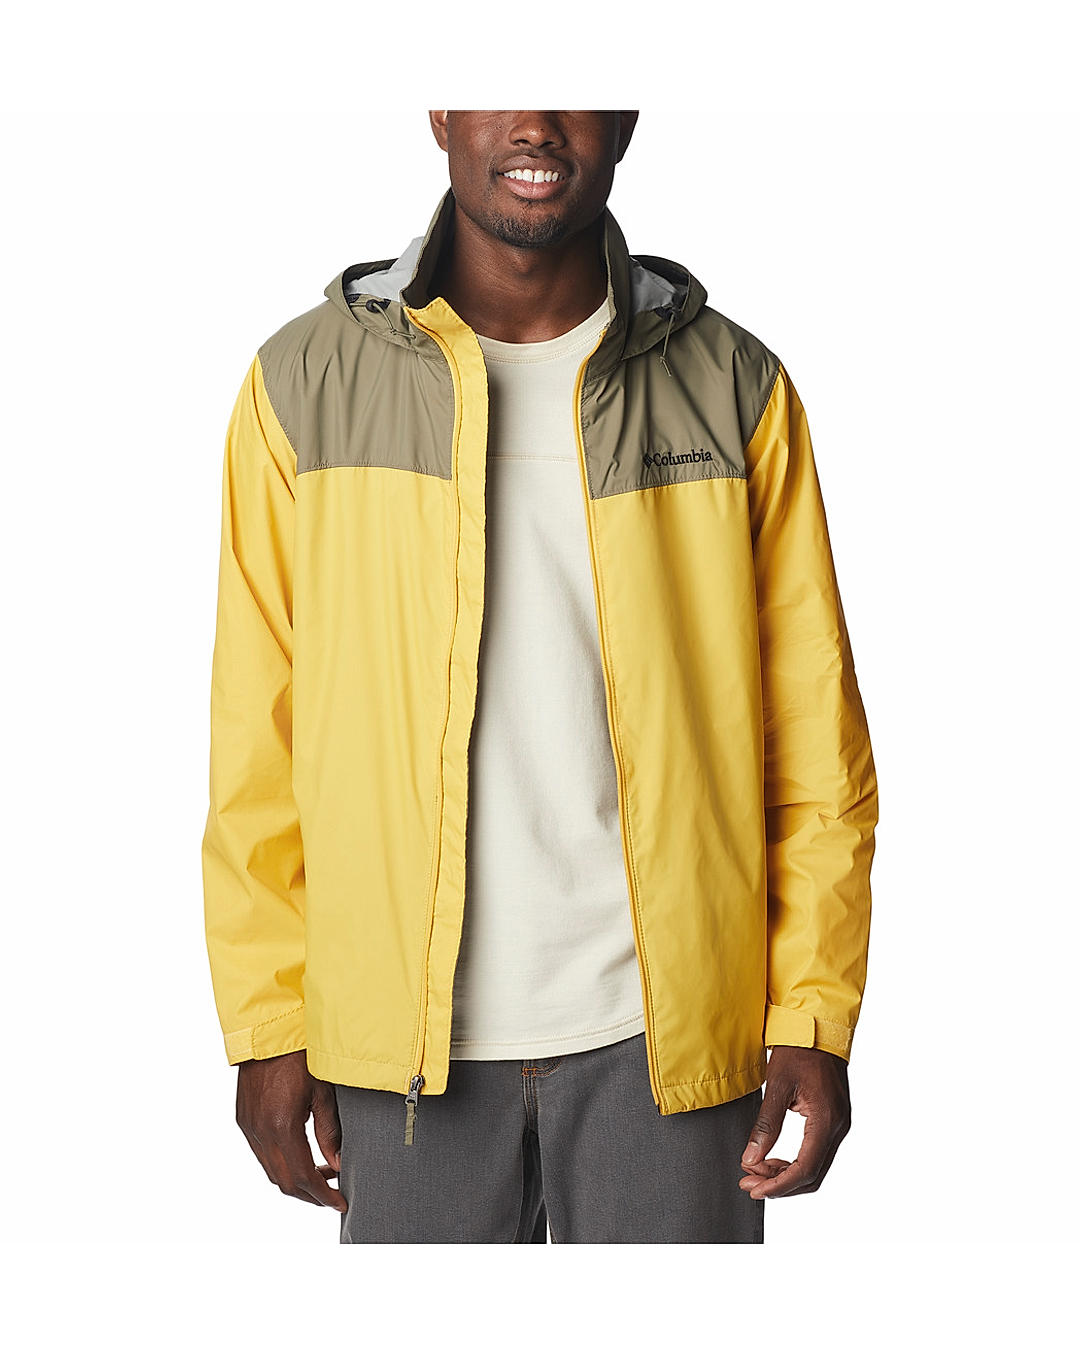 Columbia Sportswear Men's Glennaker Lake Rain Jacket